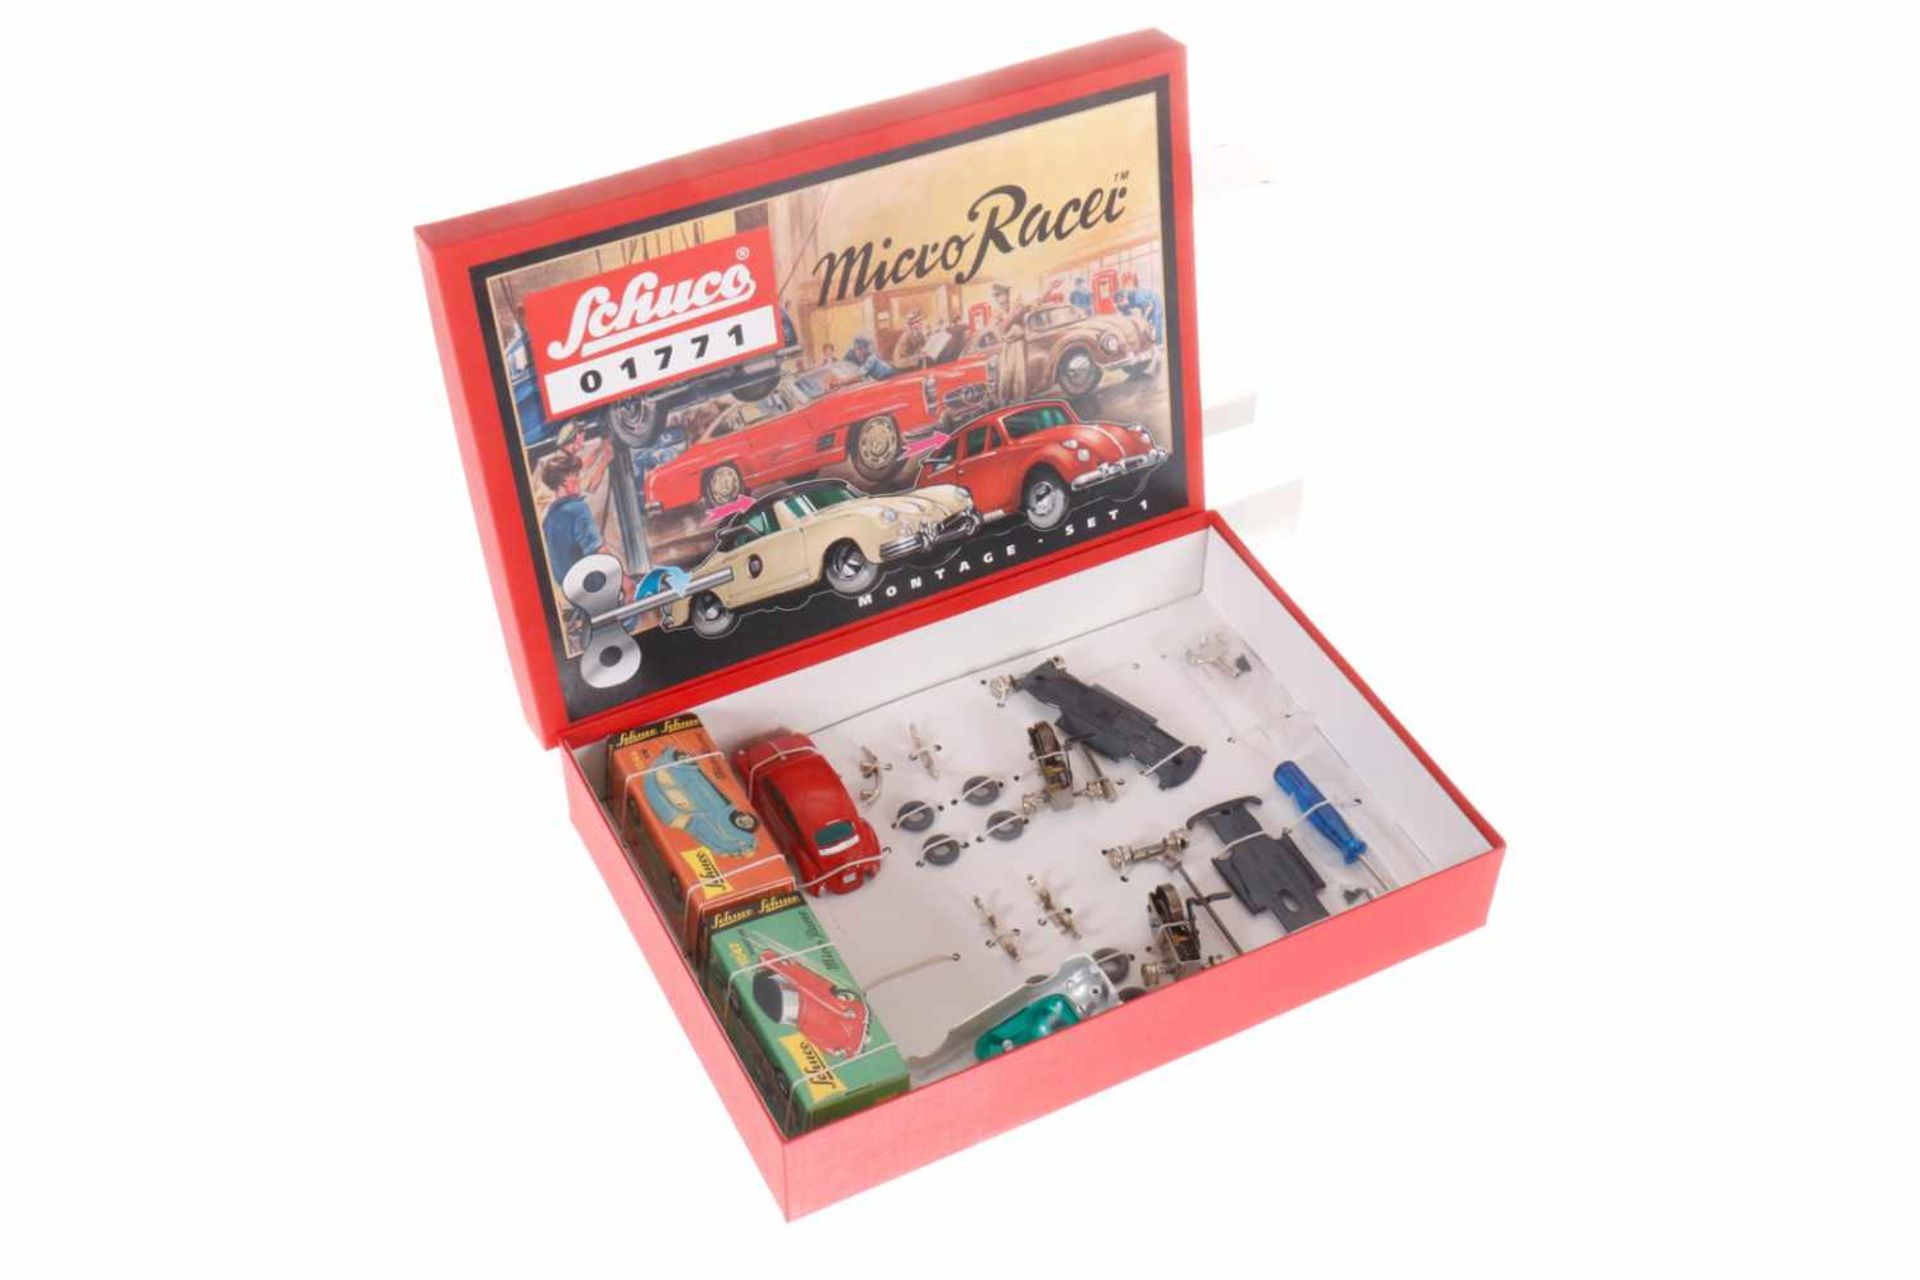 Schuco Replik-Montage-Set "Micro Racer", Nr. 01771, mit Anleitung, im OK, Z 1-2